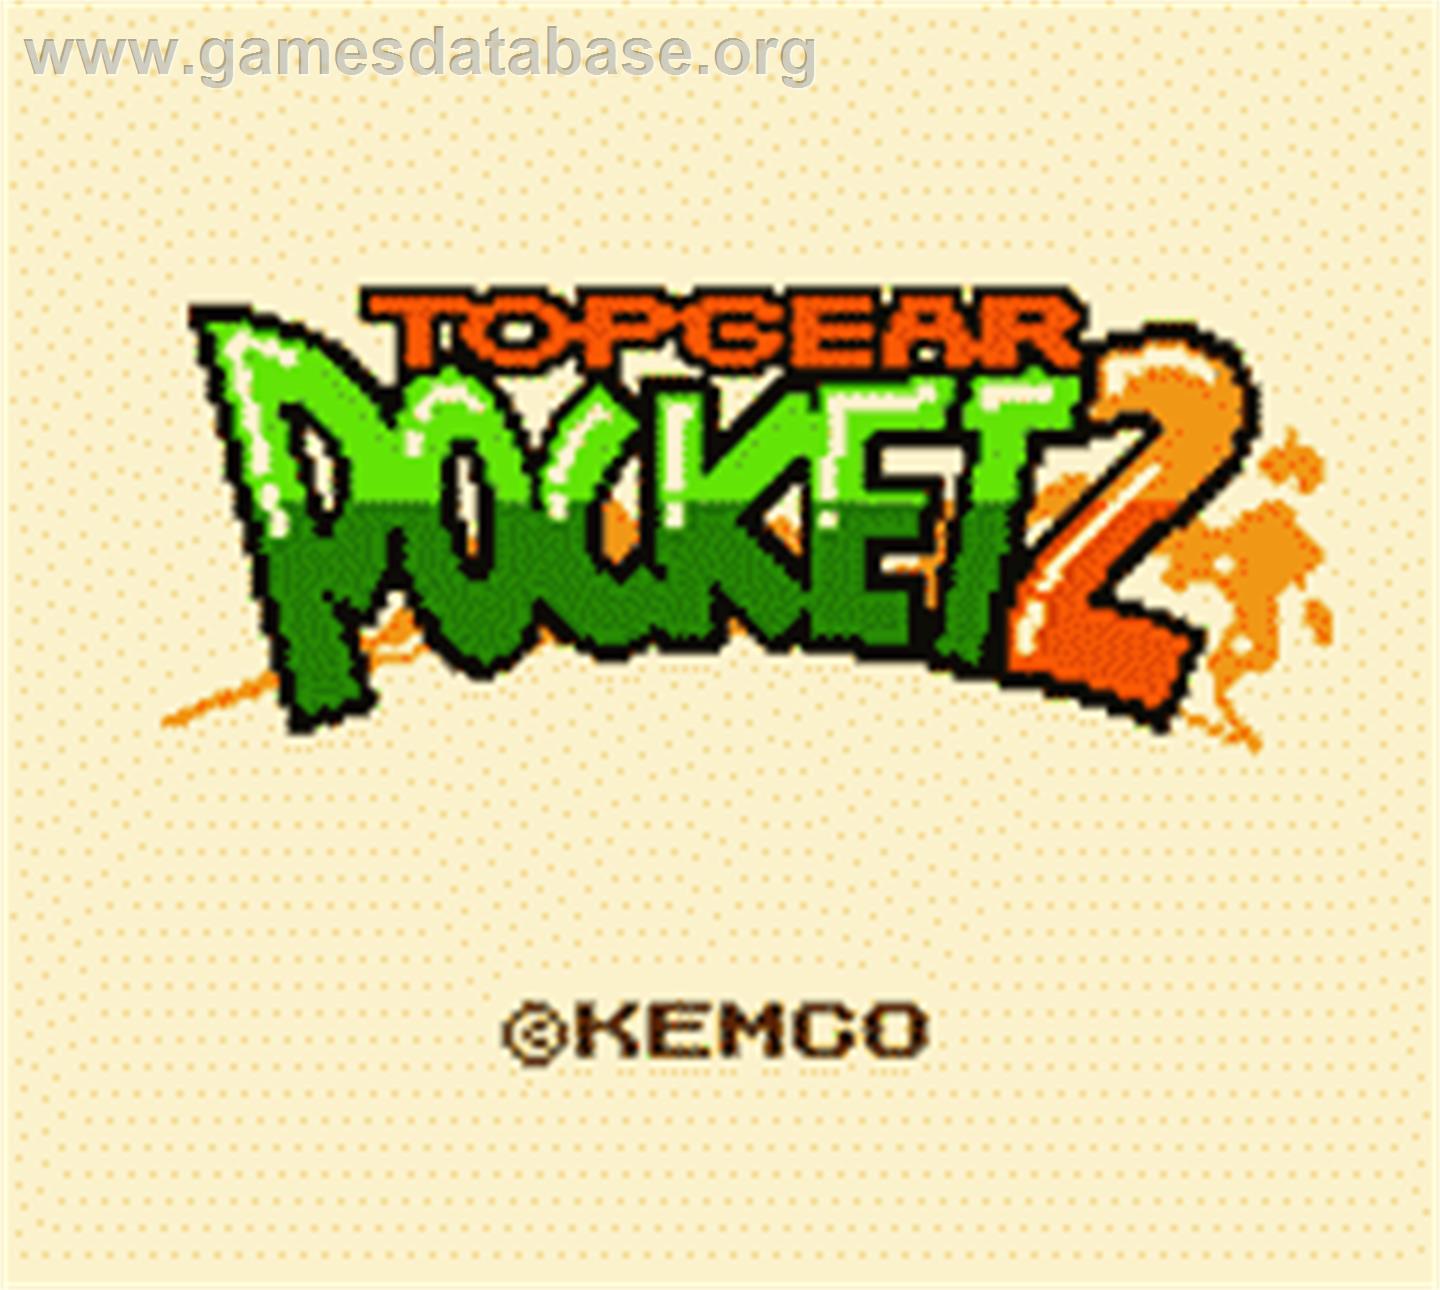 Top Gear Pocket 2 - Nintendo Game Boy Color - Artwork - Title Screen